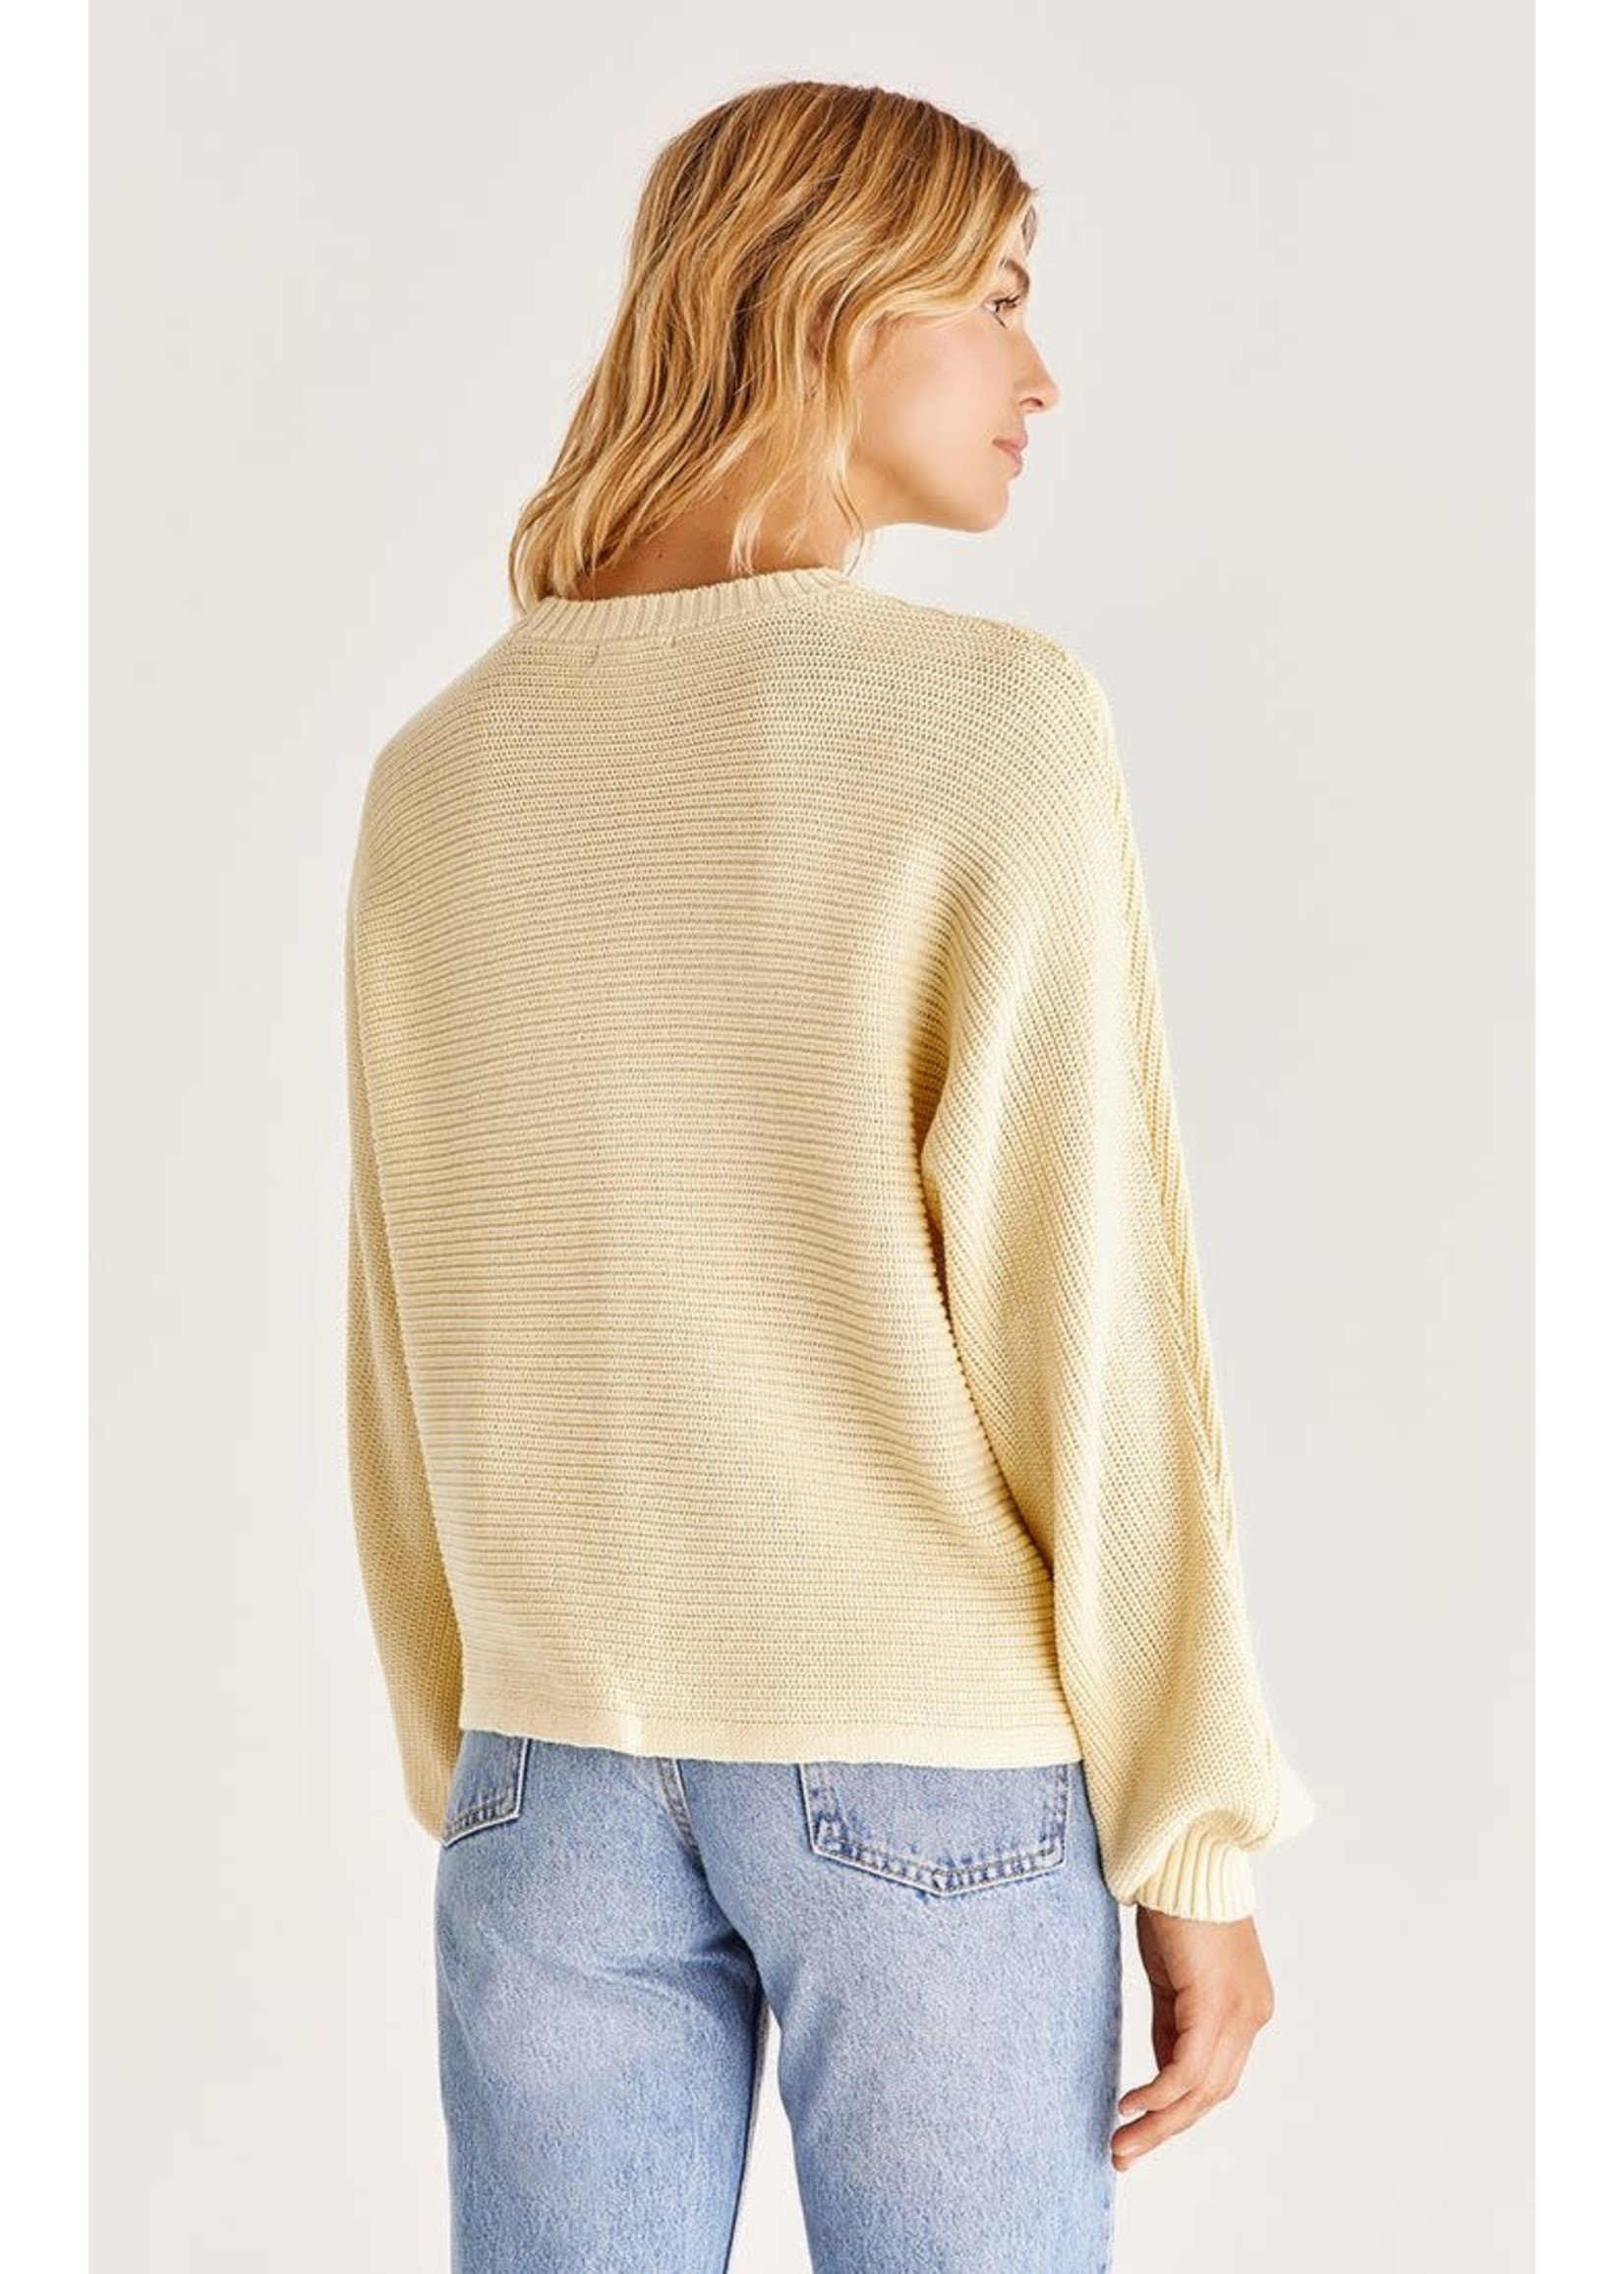 Z Supply Lola Dolman Sweater